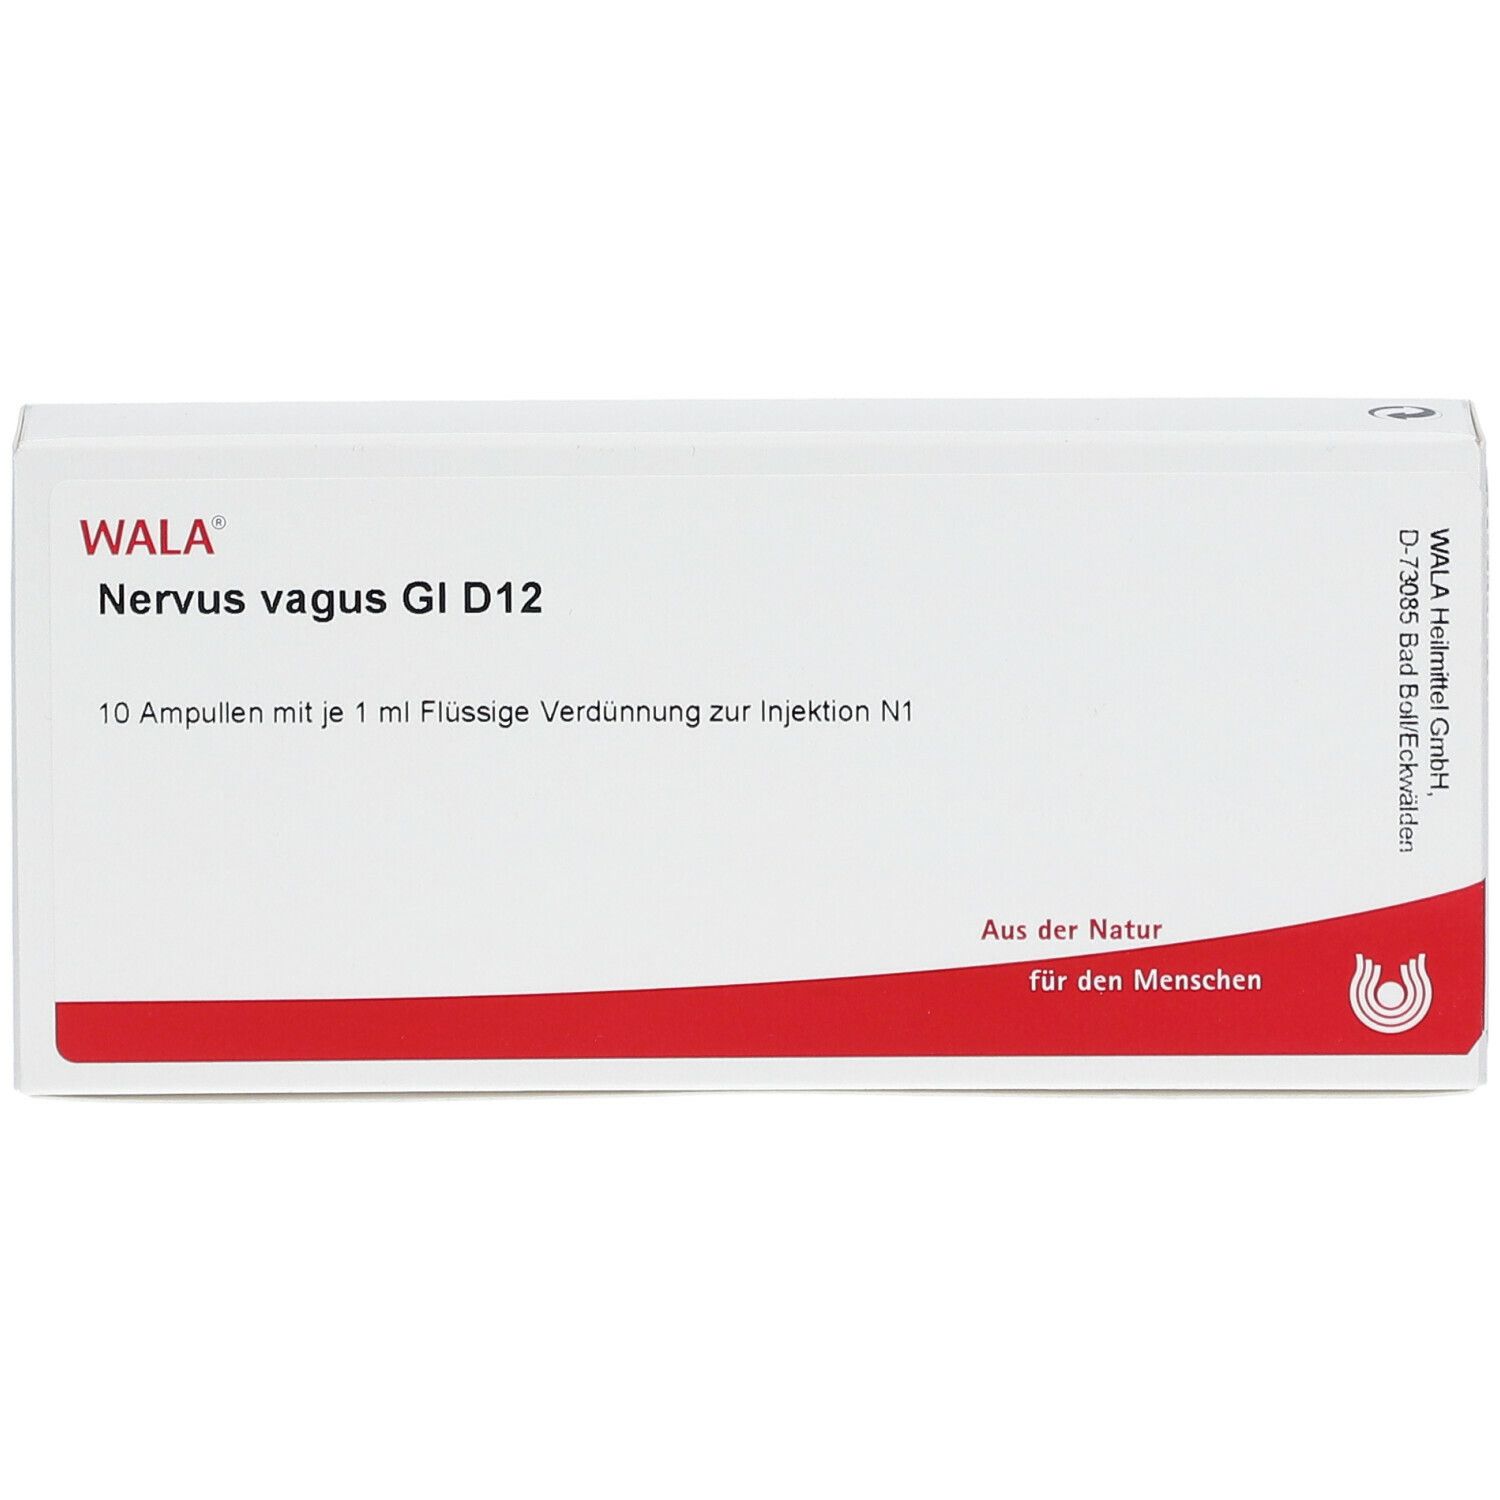 WALA® Nervus vagus Gl D 12